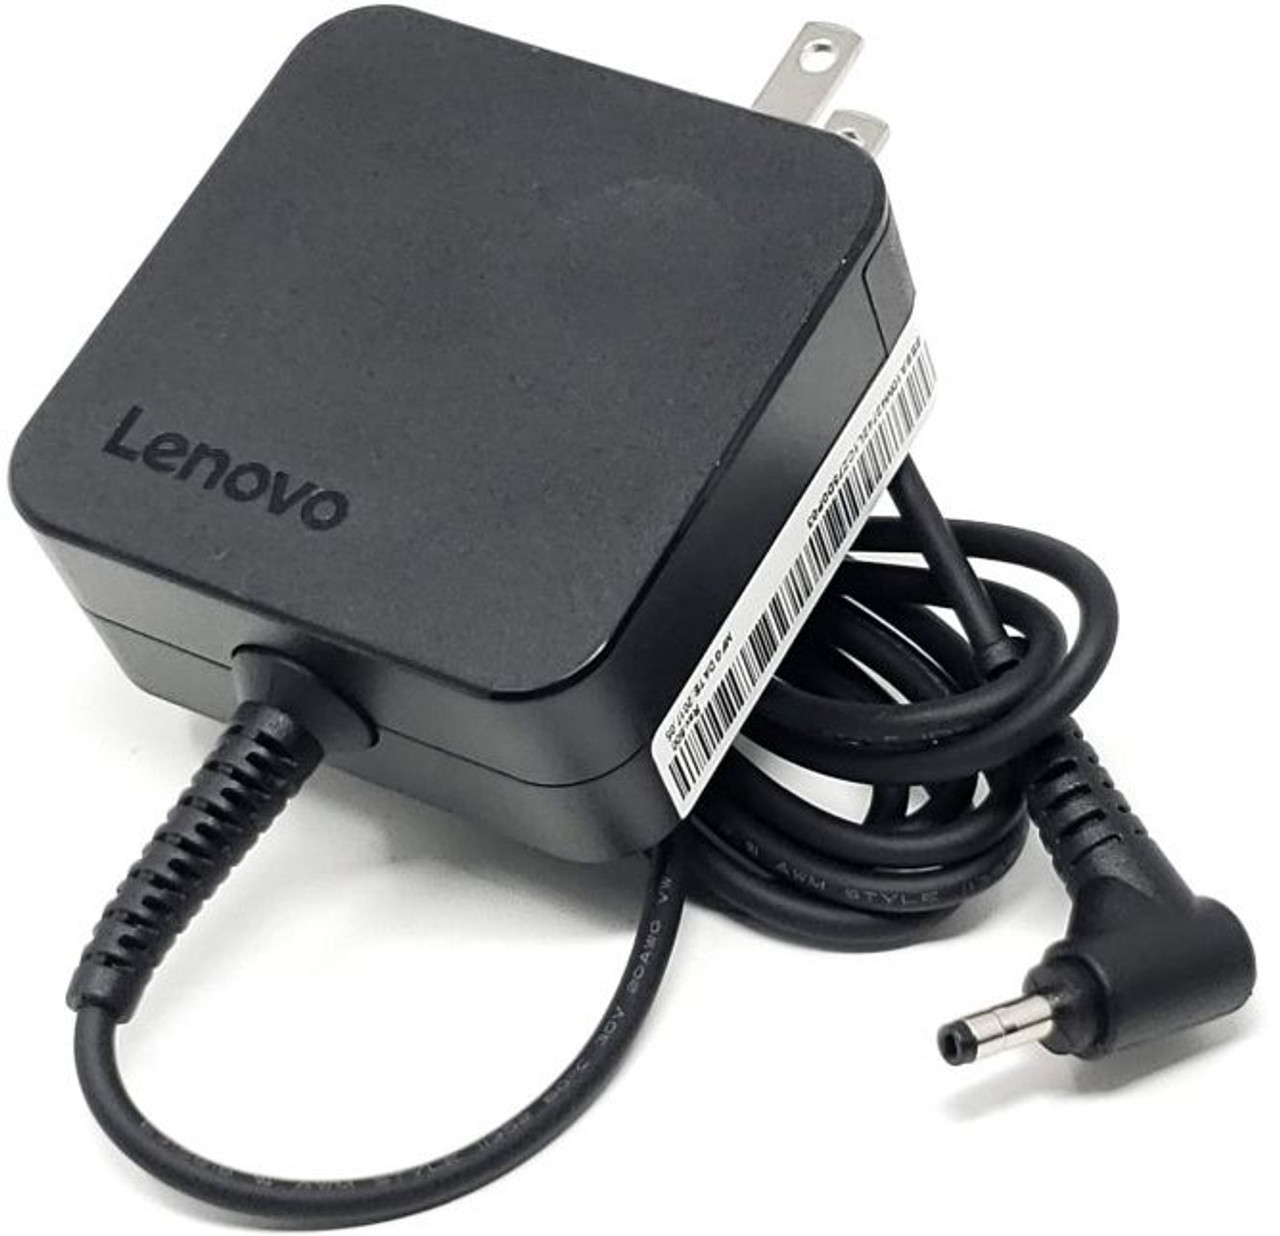 Lenovo SA10M42700 - 45W 20V 2.25A 1.7mm AC Adapter Lenovo Yoga 100 110 510 710 CPU Medics